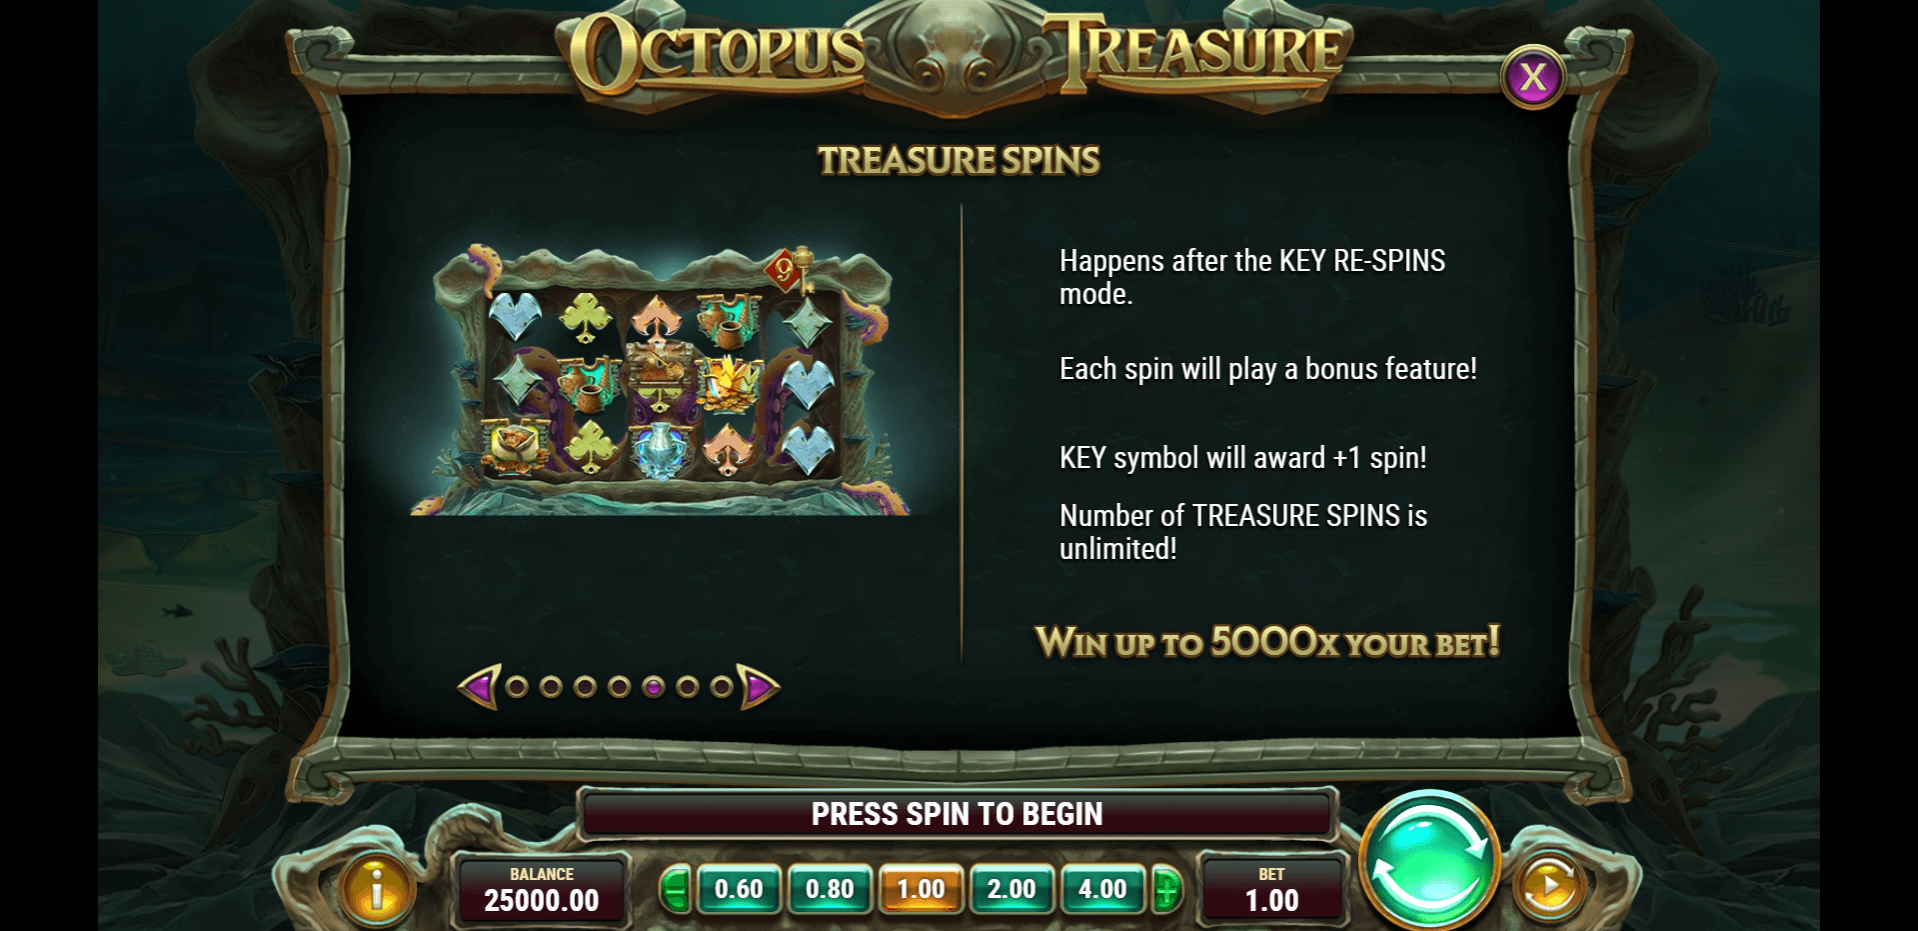 octopus treasure slot machine detail image 4